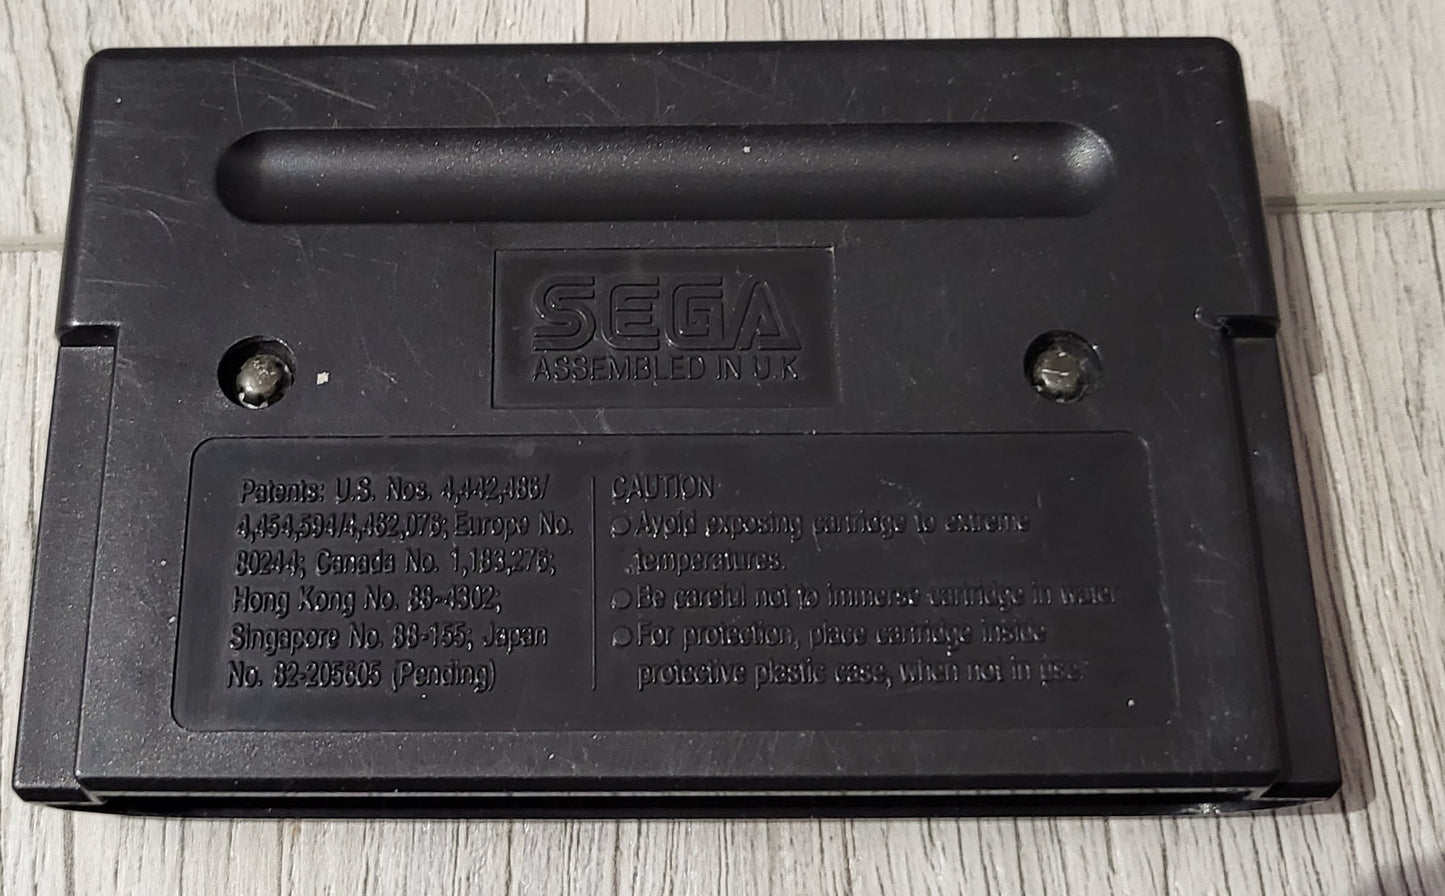 Toy Story Sega Mega Drive Game Cartridge Only